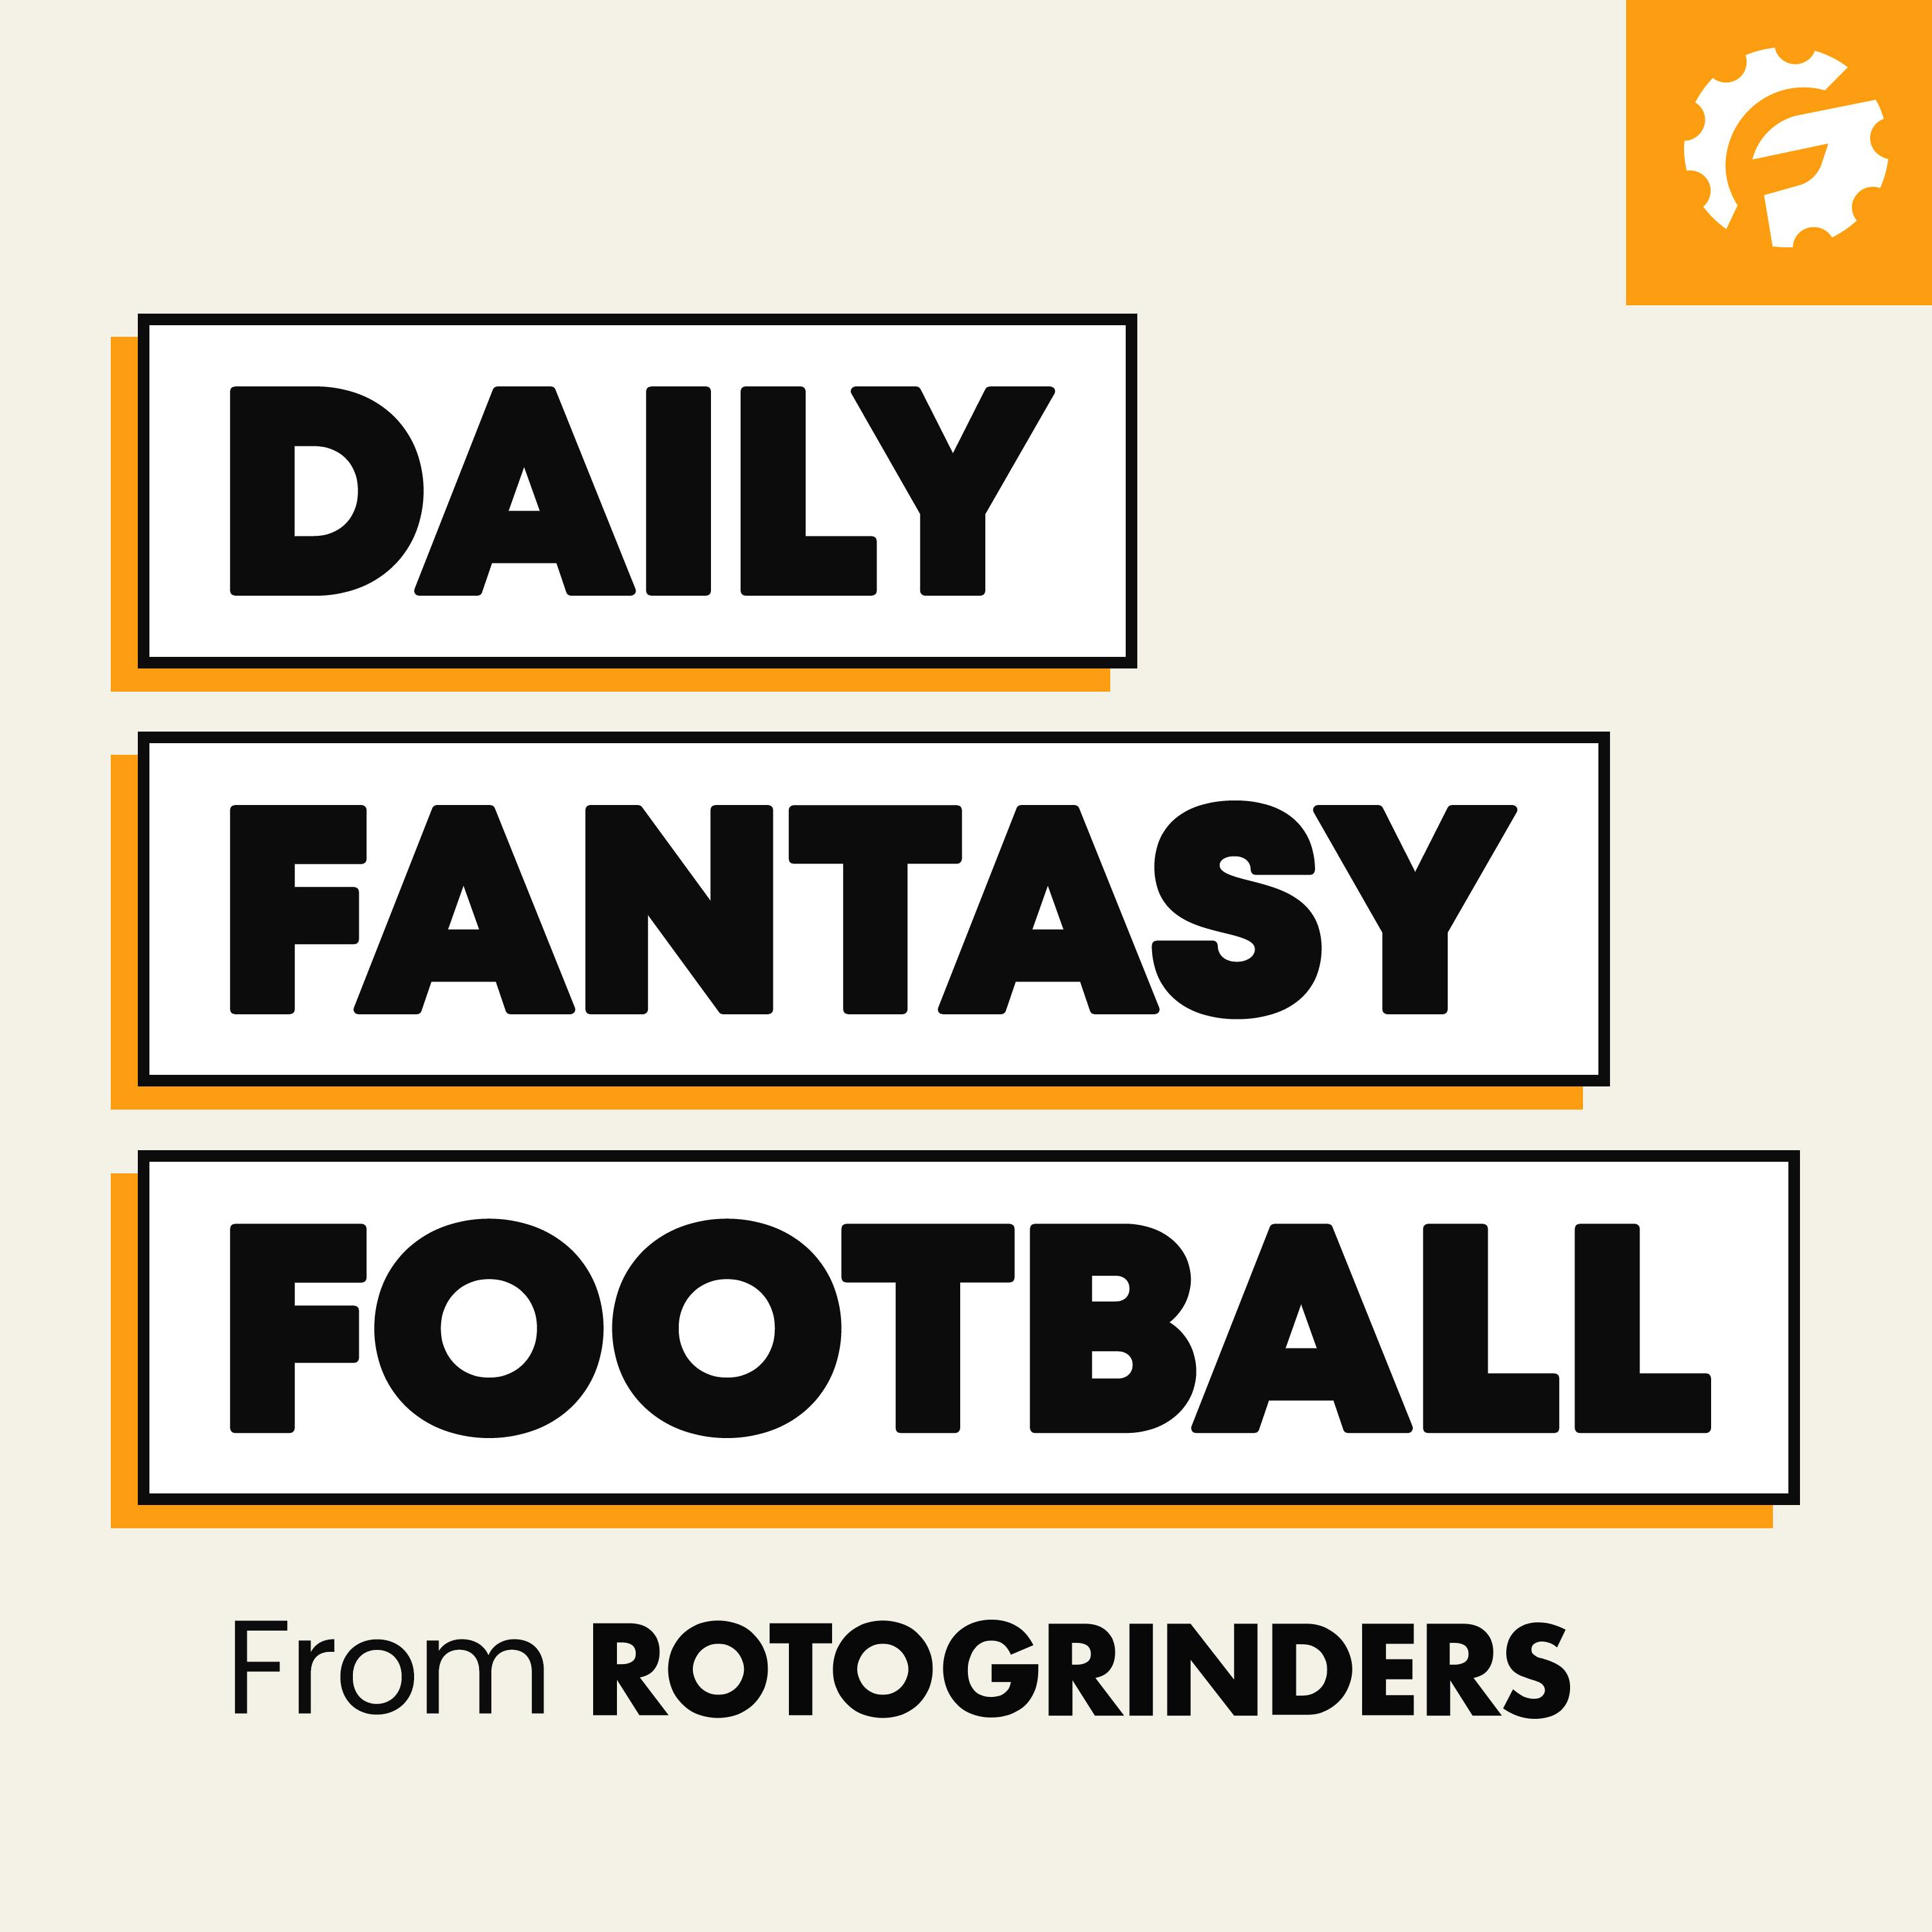 RotoGrinders Daily Fantasy Football